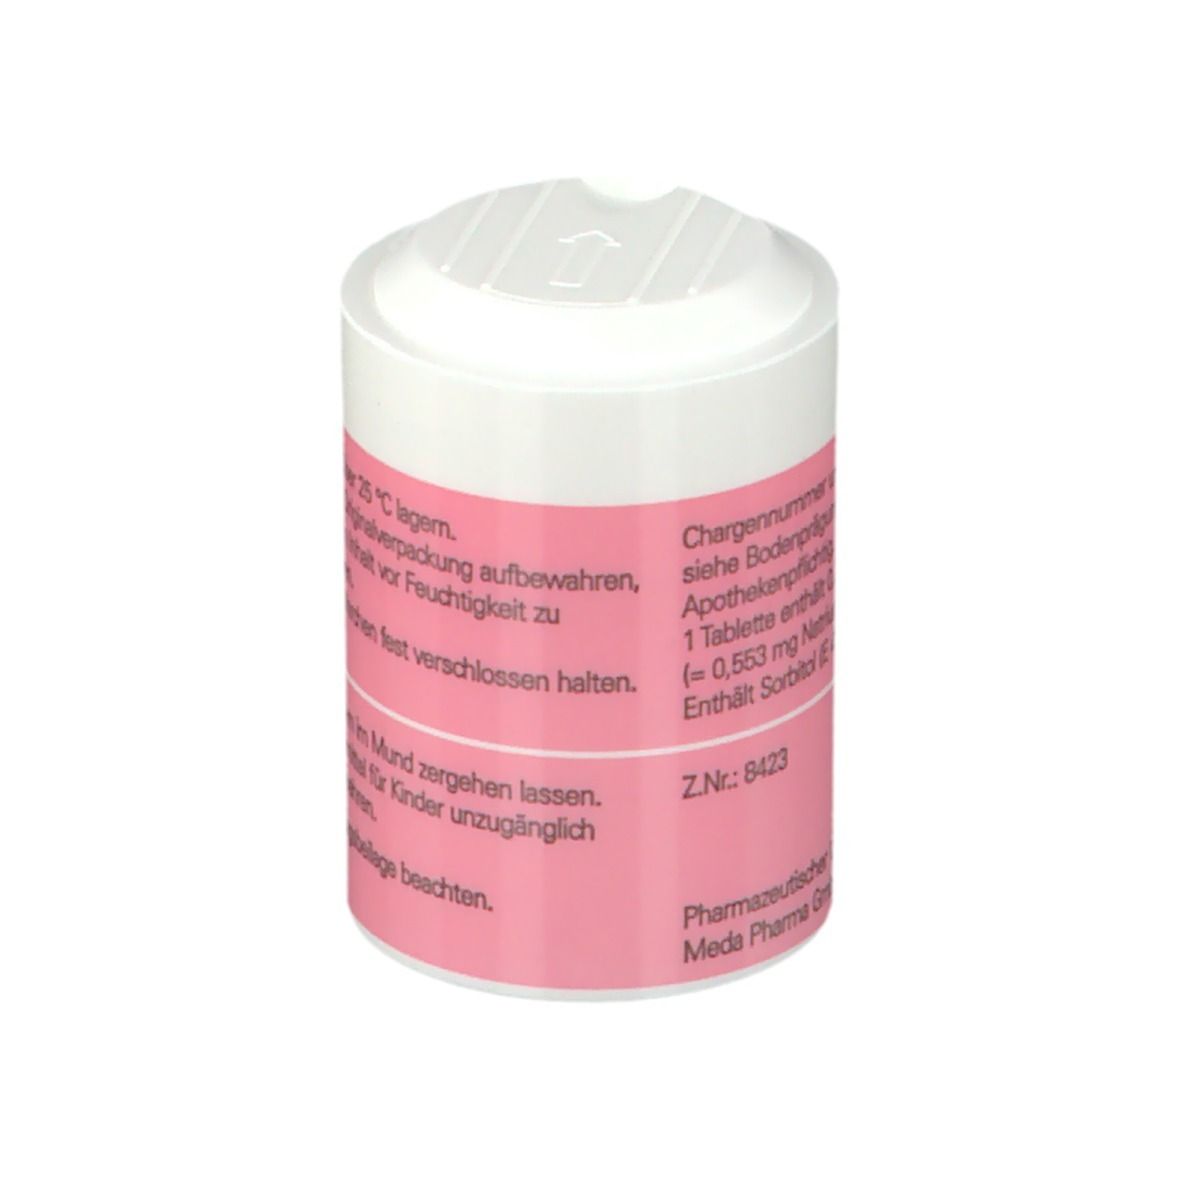 Zymafluor® 0,25 mg